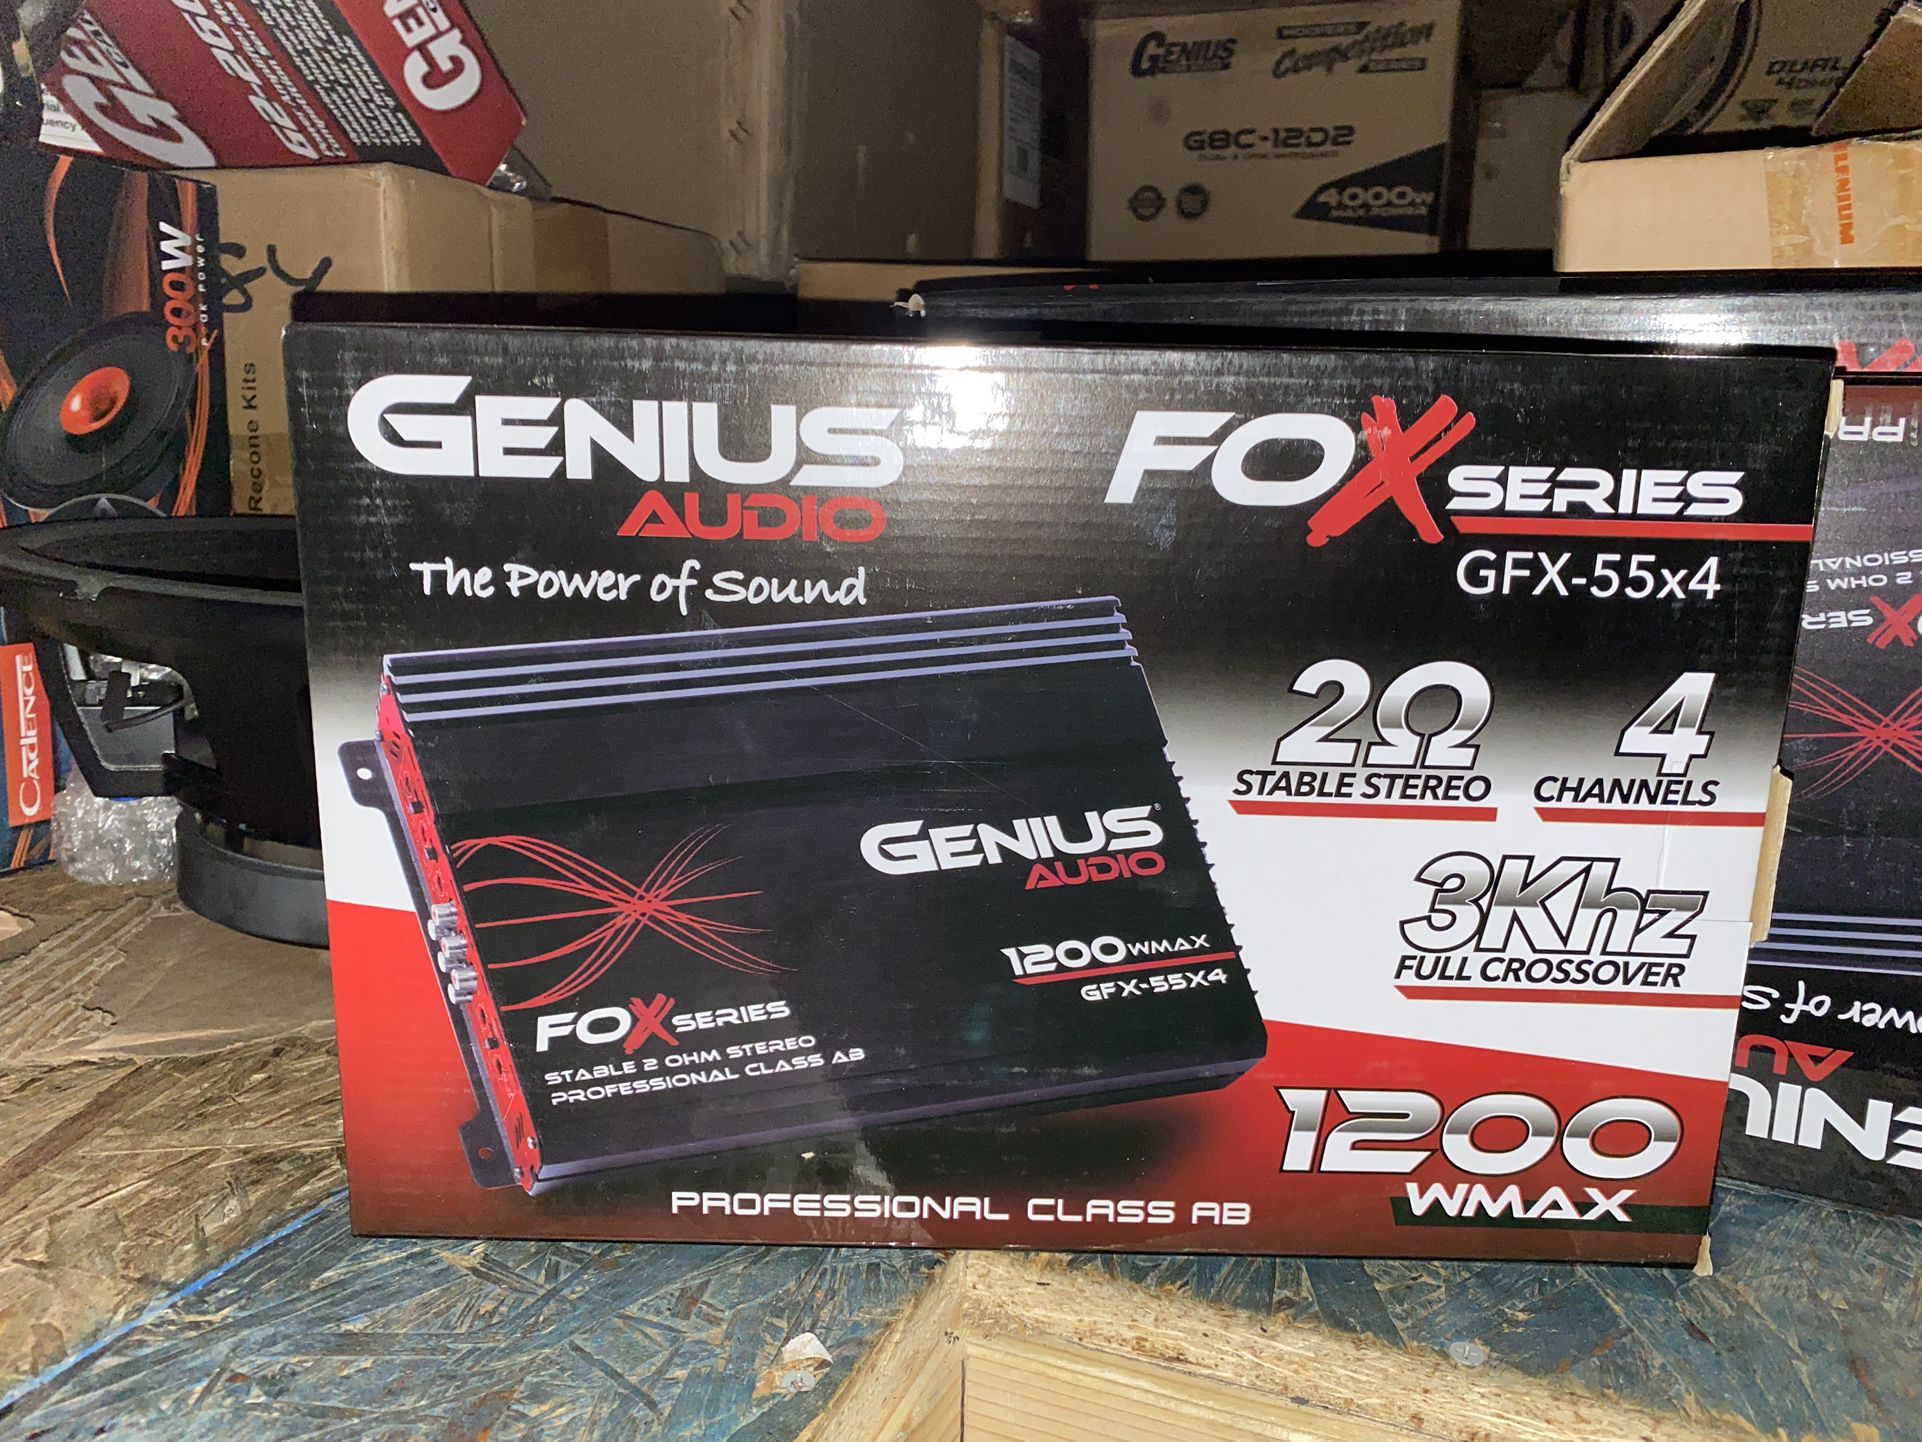 New Genius Audio 1200w Max Power 4-Channel Amplifier  $110 Each 